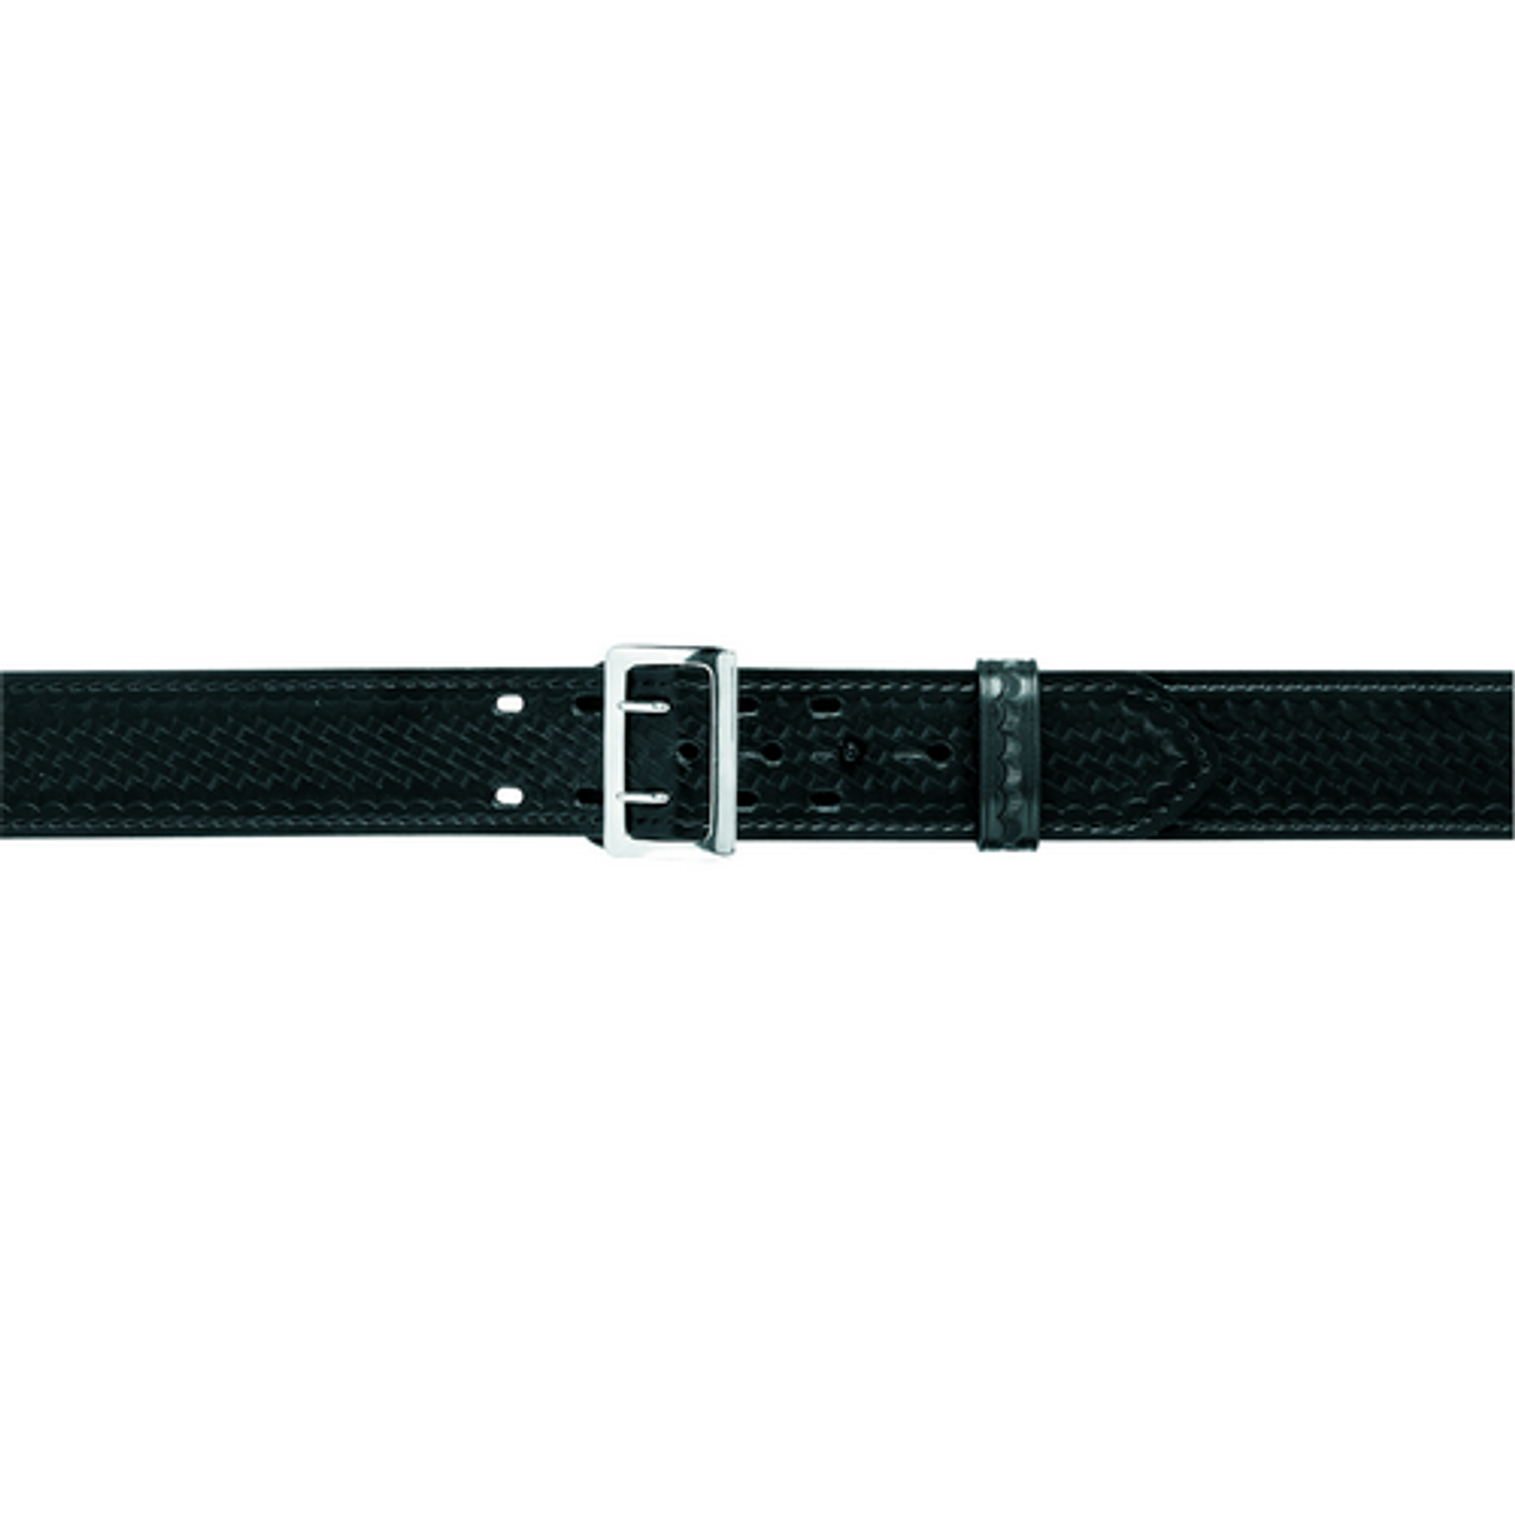 87 - Sam Browne Buckled Duty Belt, 2.25 (58mm) - KR87-44-8B